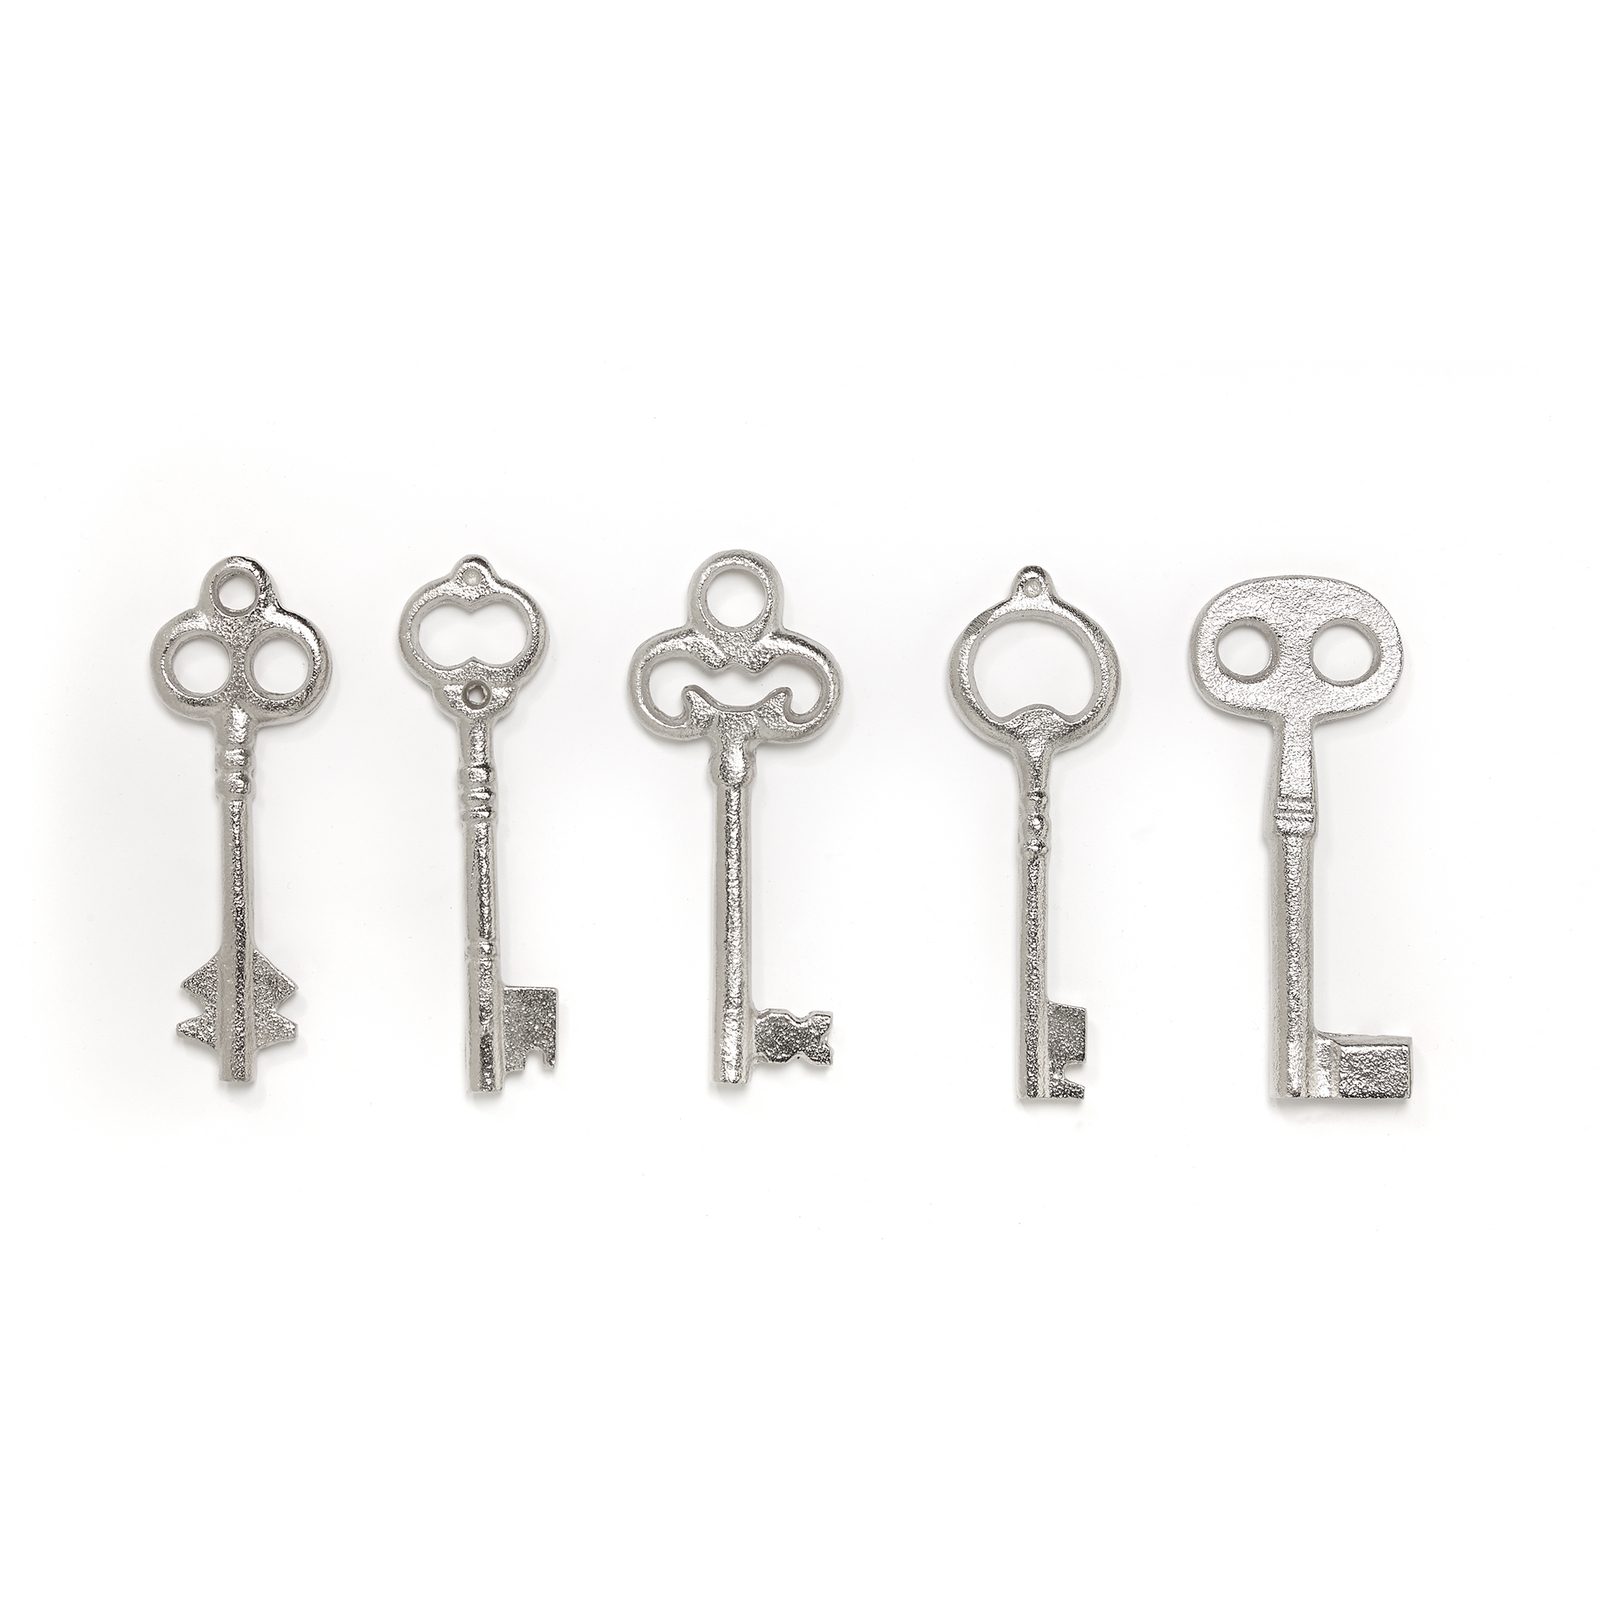 Metal Keys - 15 x 6 x 0.5cm - Assorted - Pack of 5